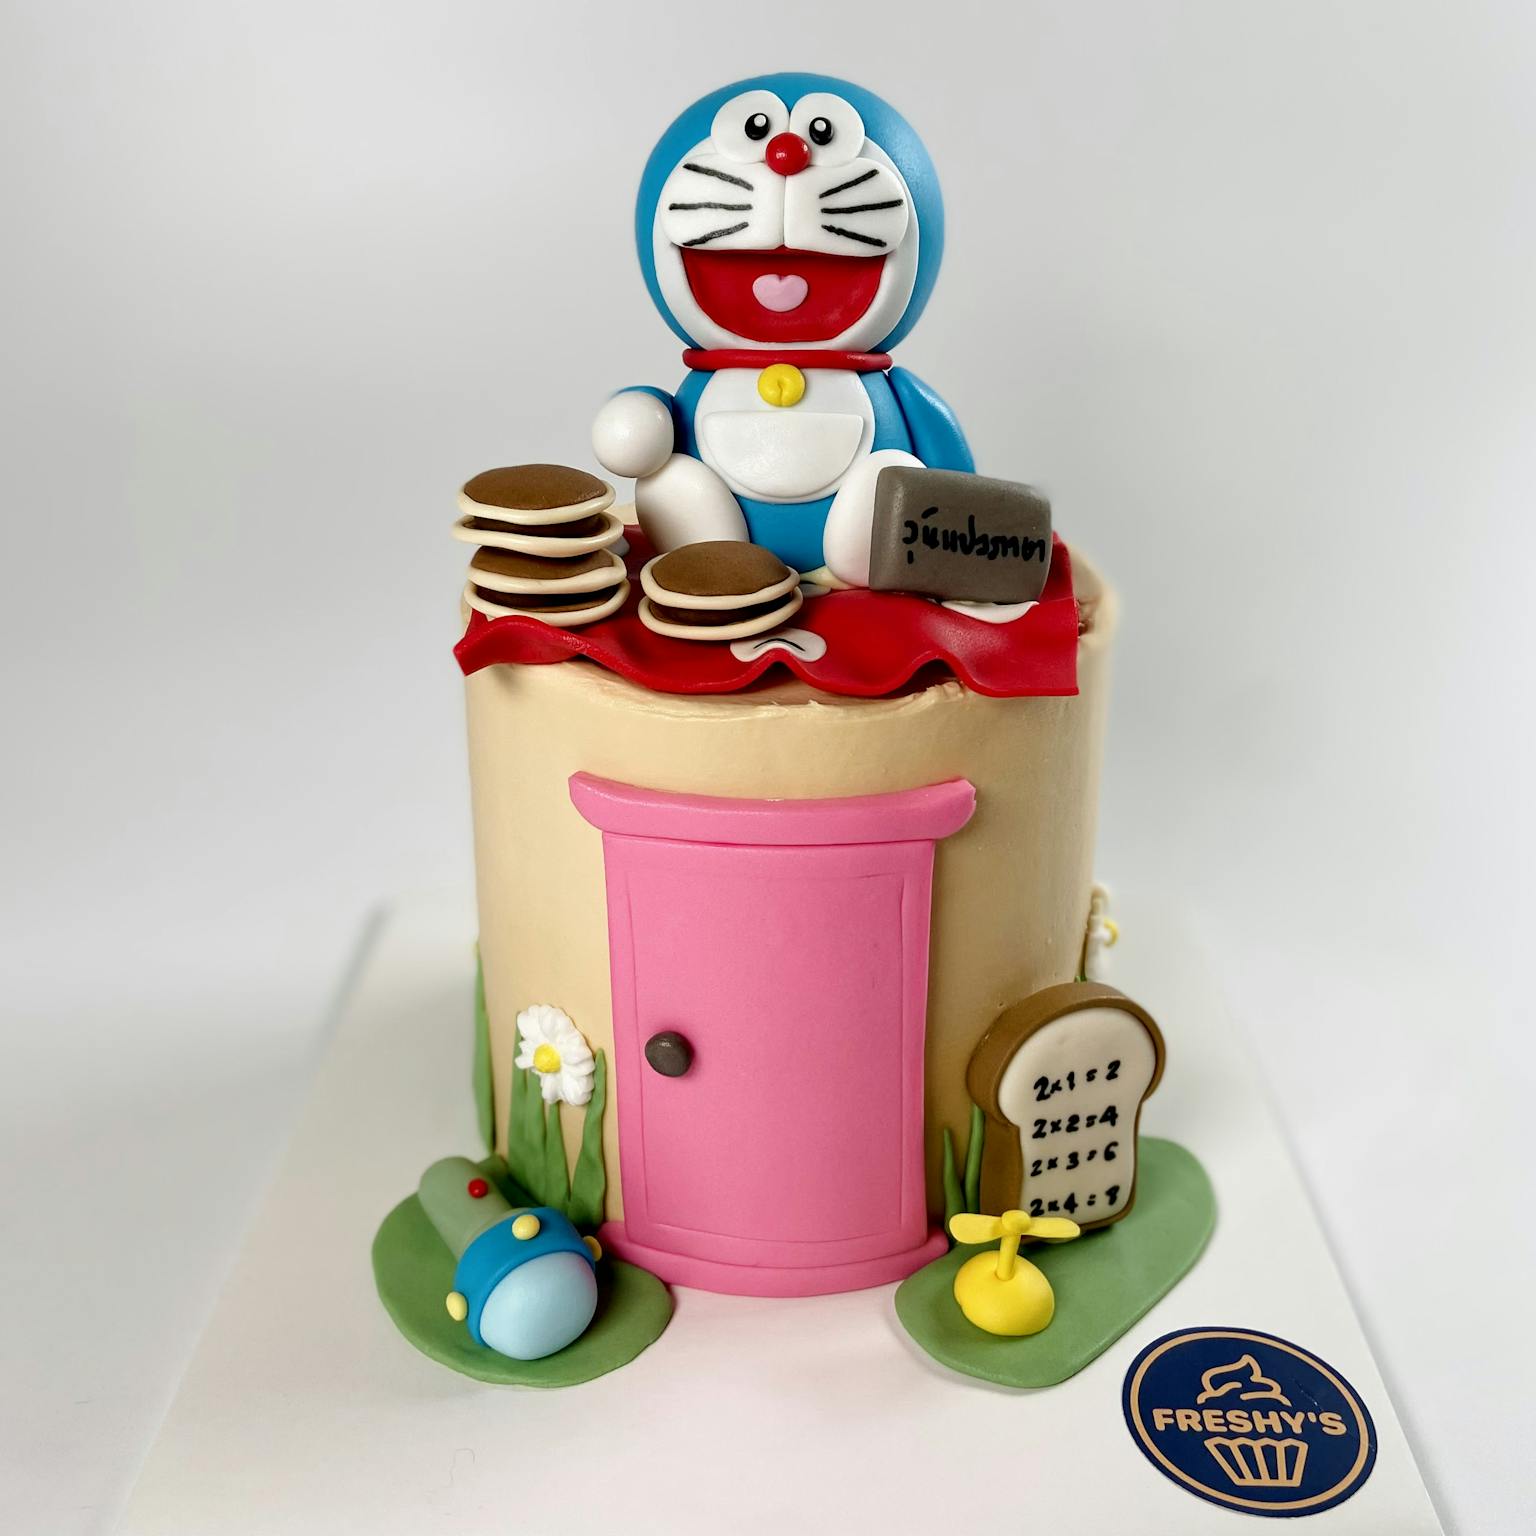 100% edible fondant sculpted Doraemon cake